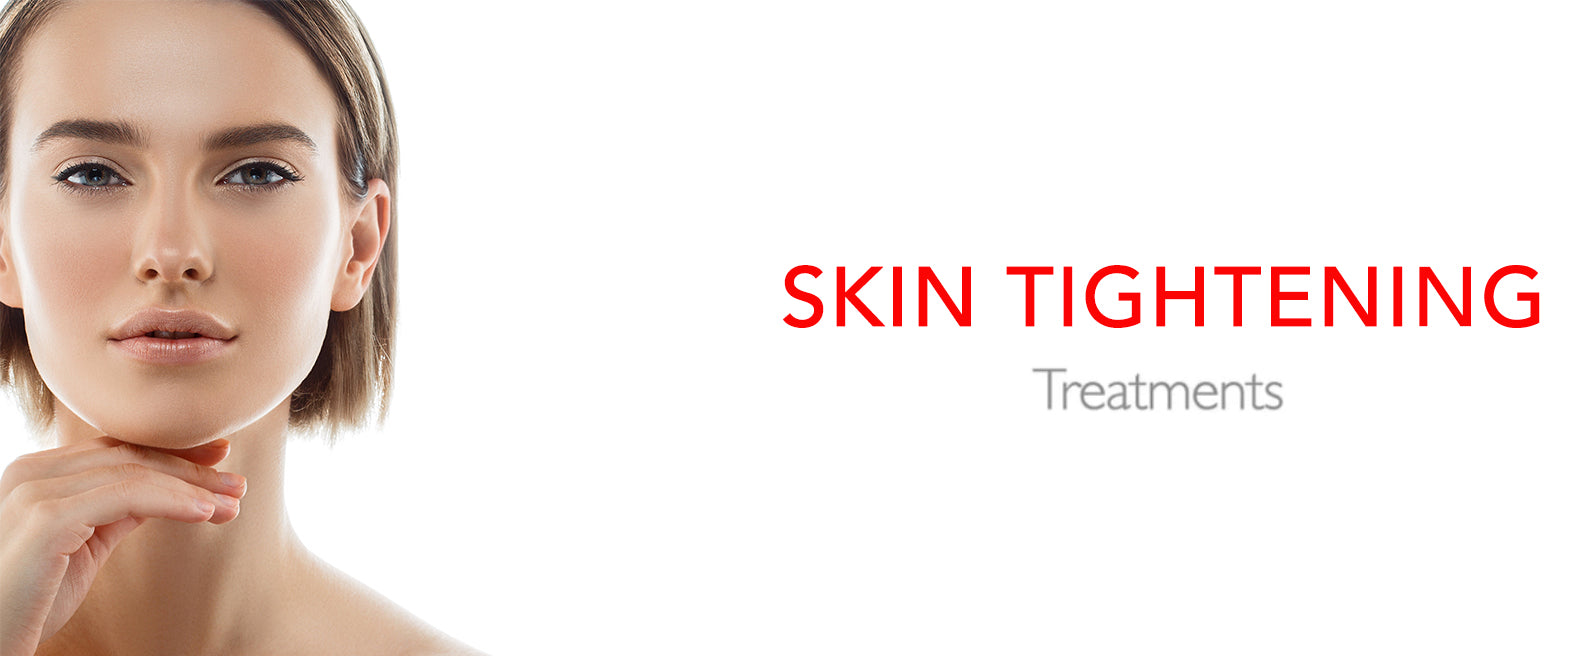 Skin Tightening Treatments